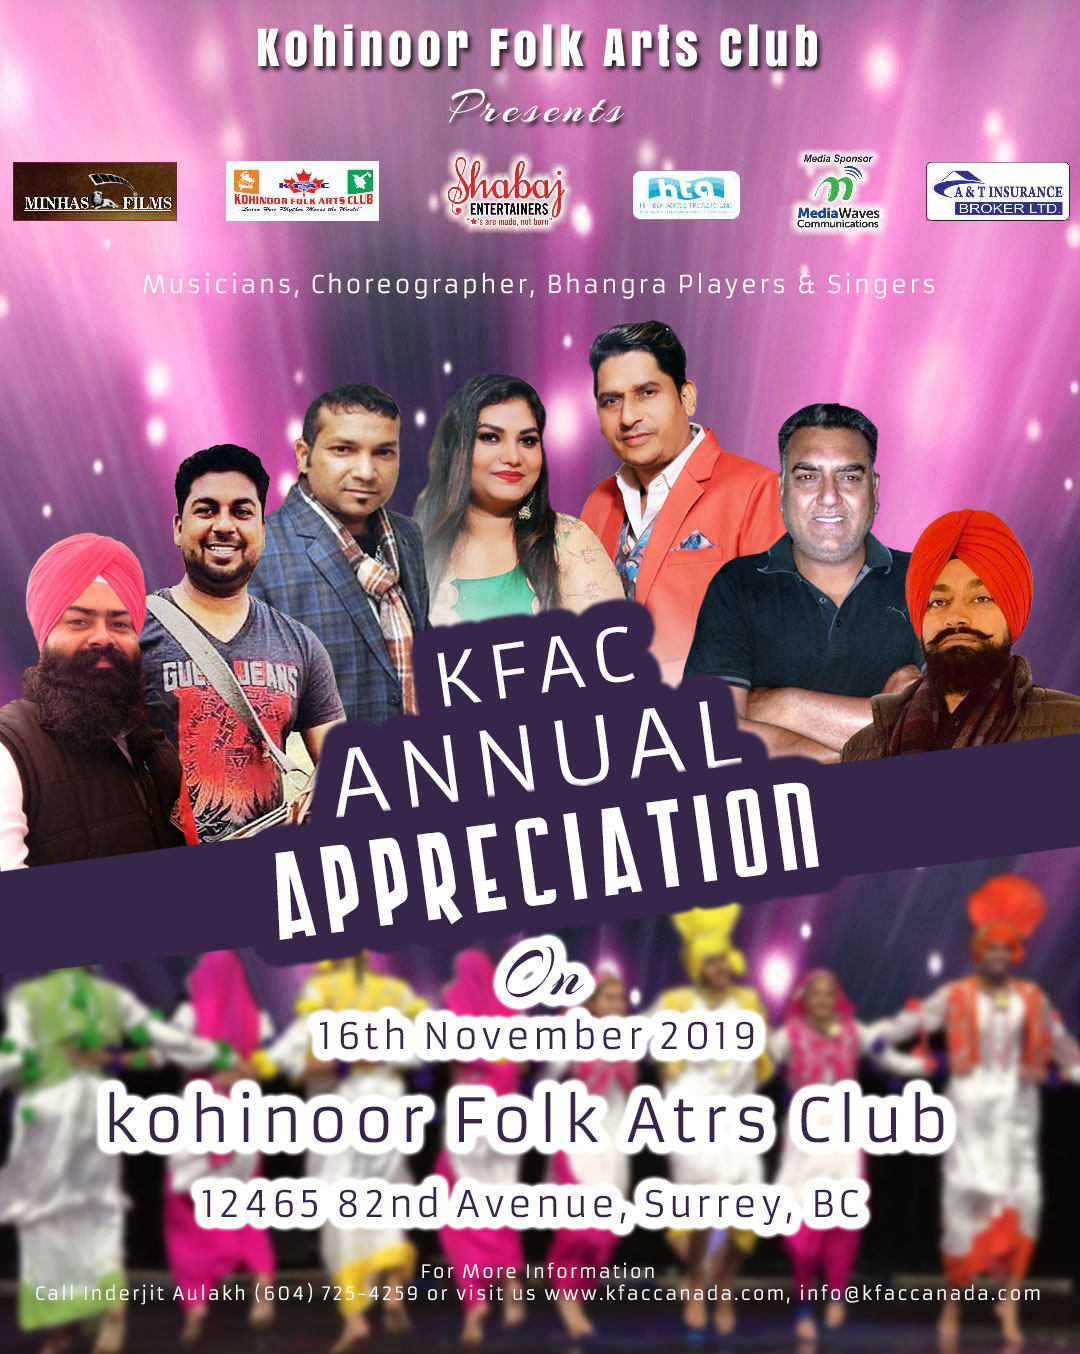 KFAC Event on 16 November, 2019